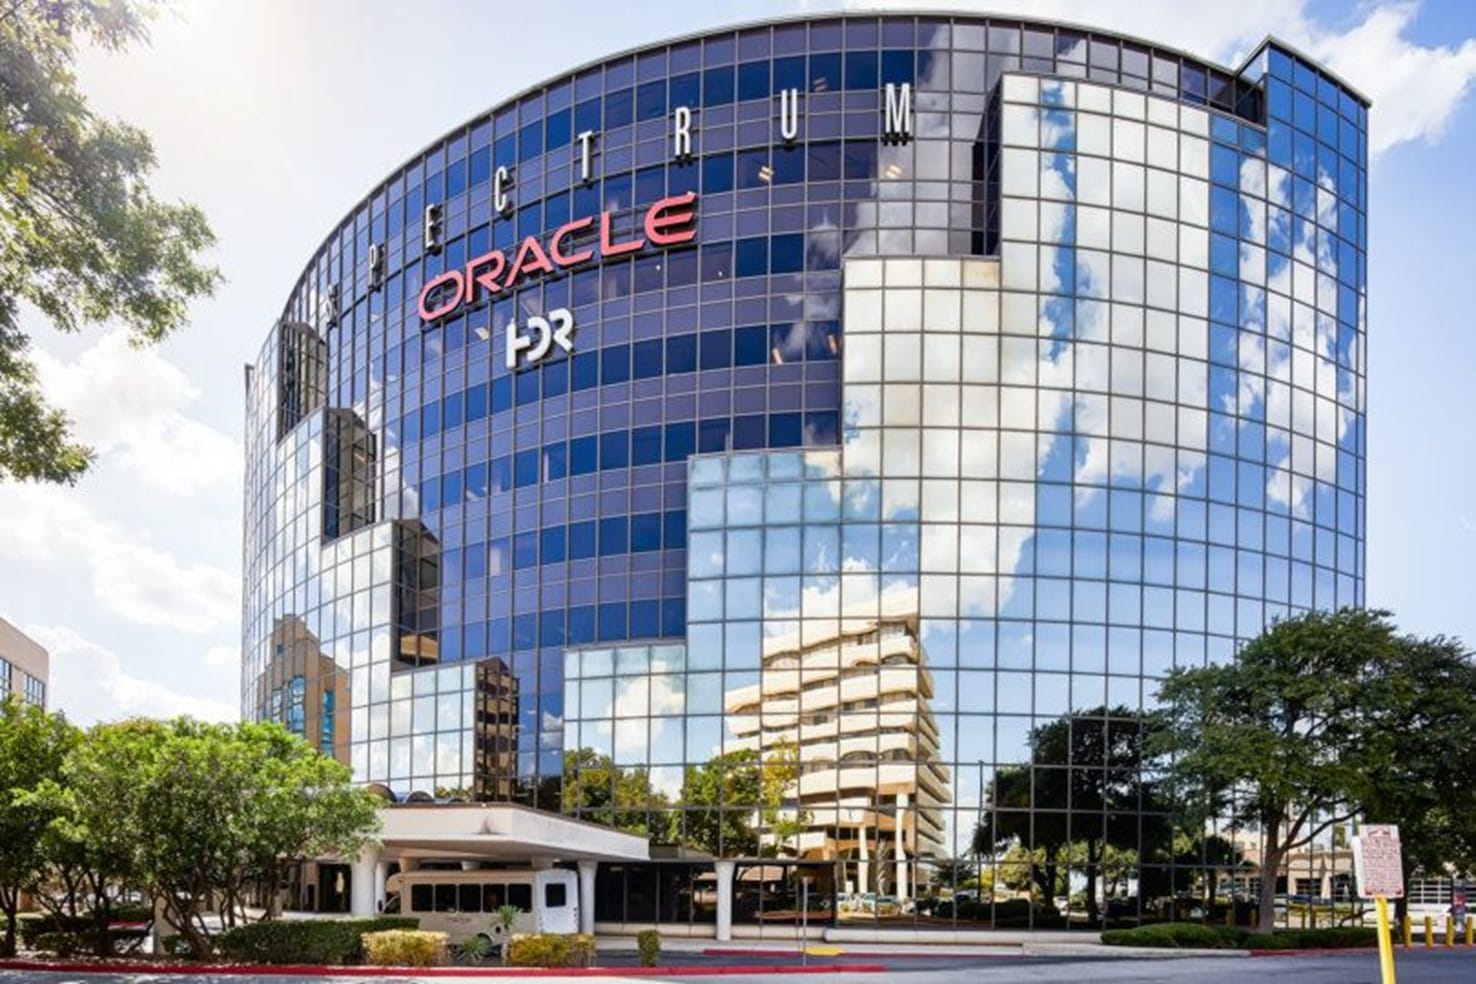 Oracle America Leases Two Full Floors at Hartman’s Spectrum Office Building in San Antonio, TX